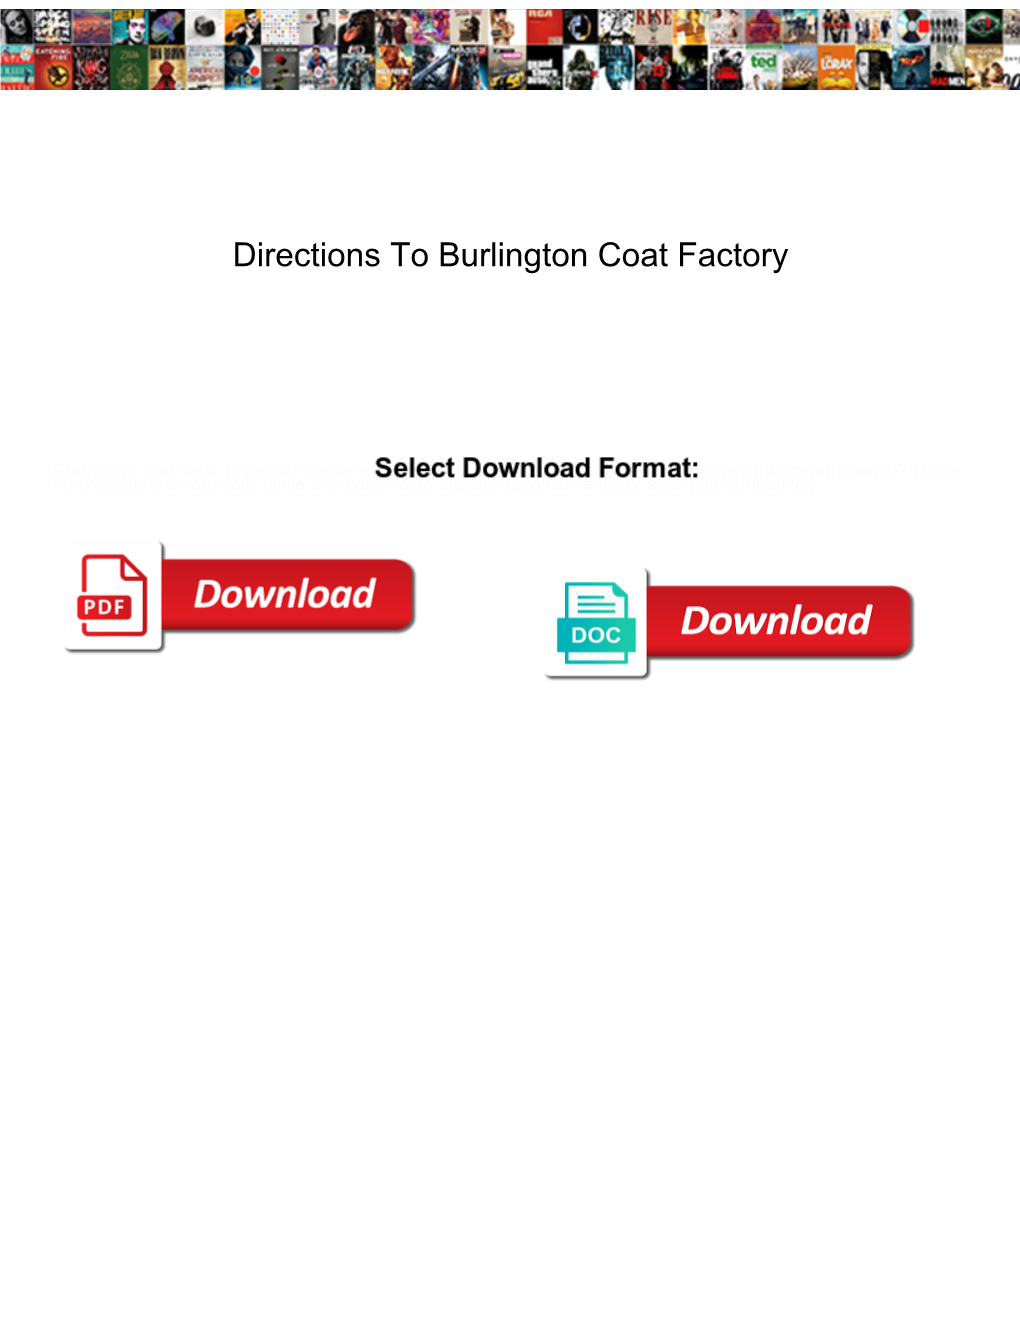 Directions to Burlington Coat Factory